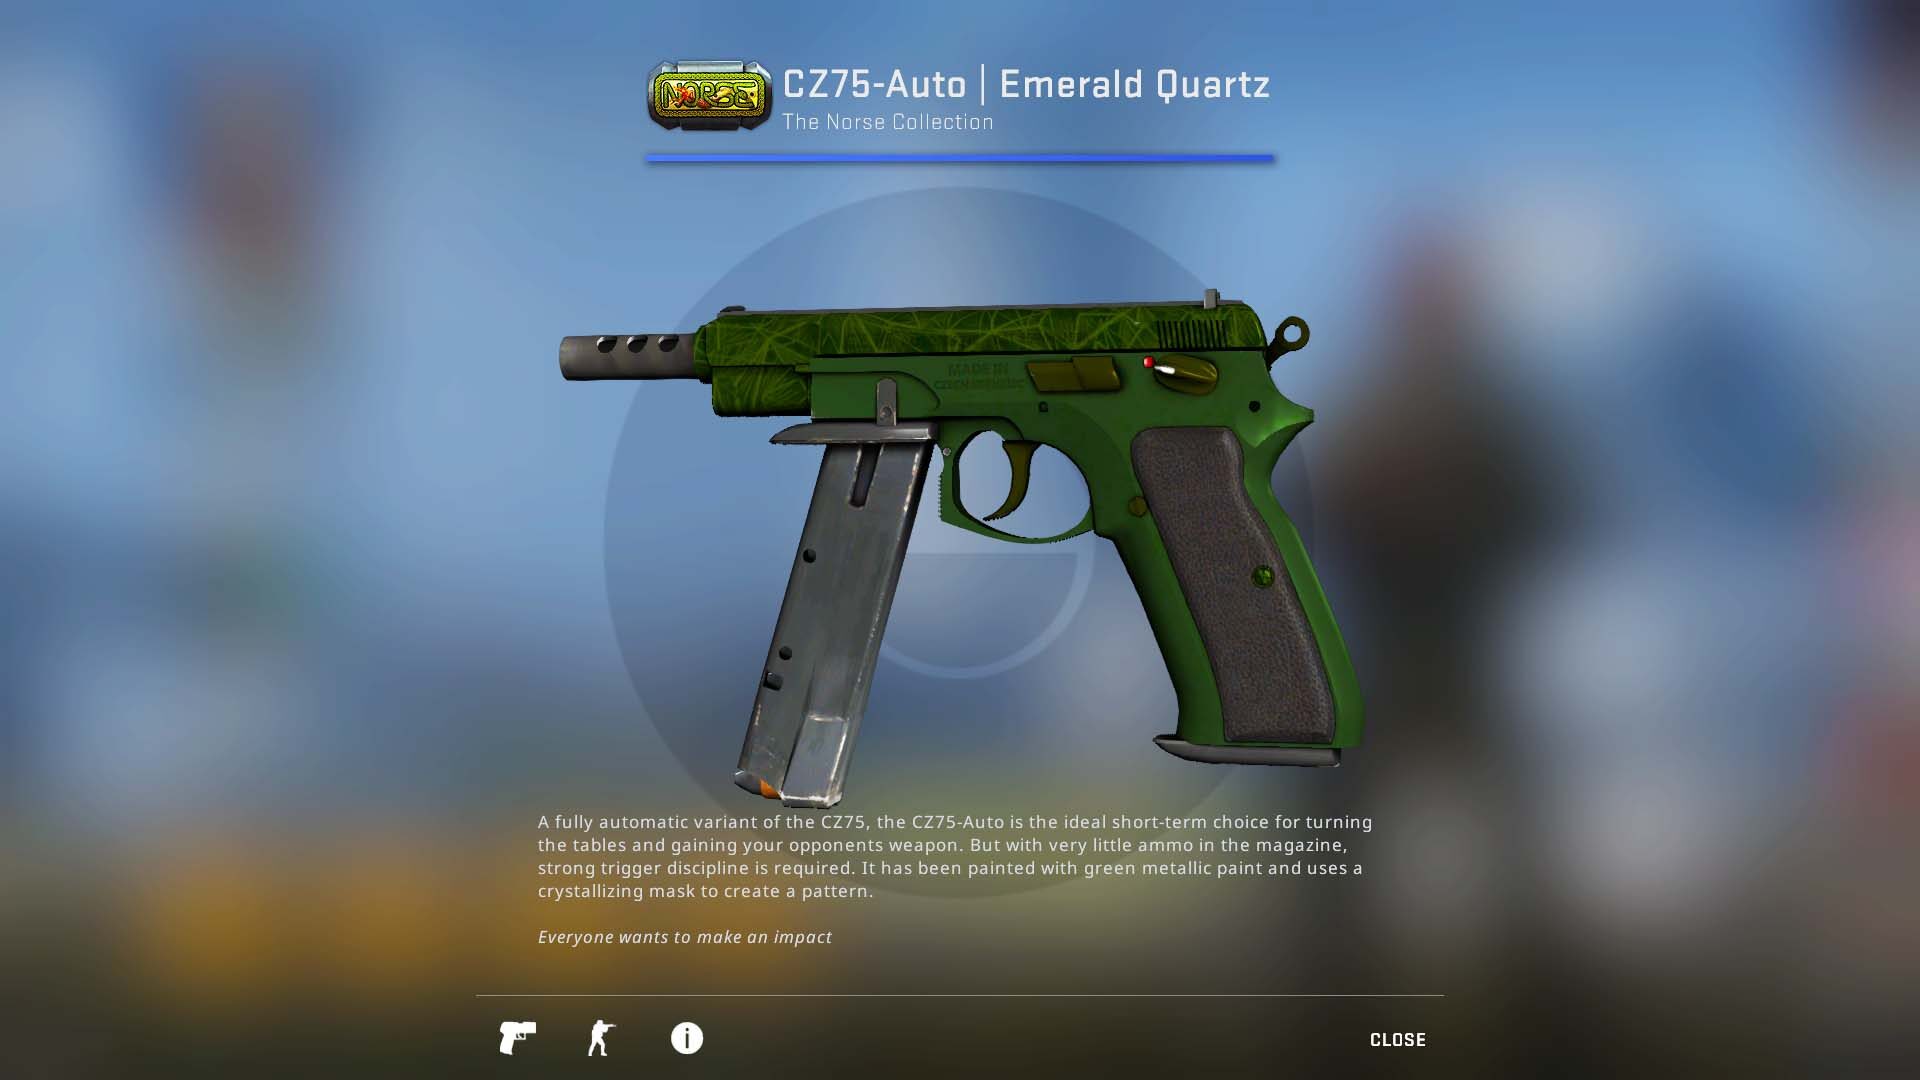 CSGO pistol CZ75 auto emerald quartz skin